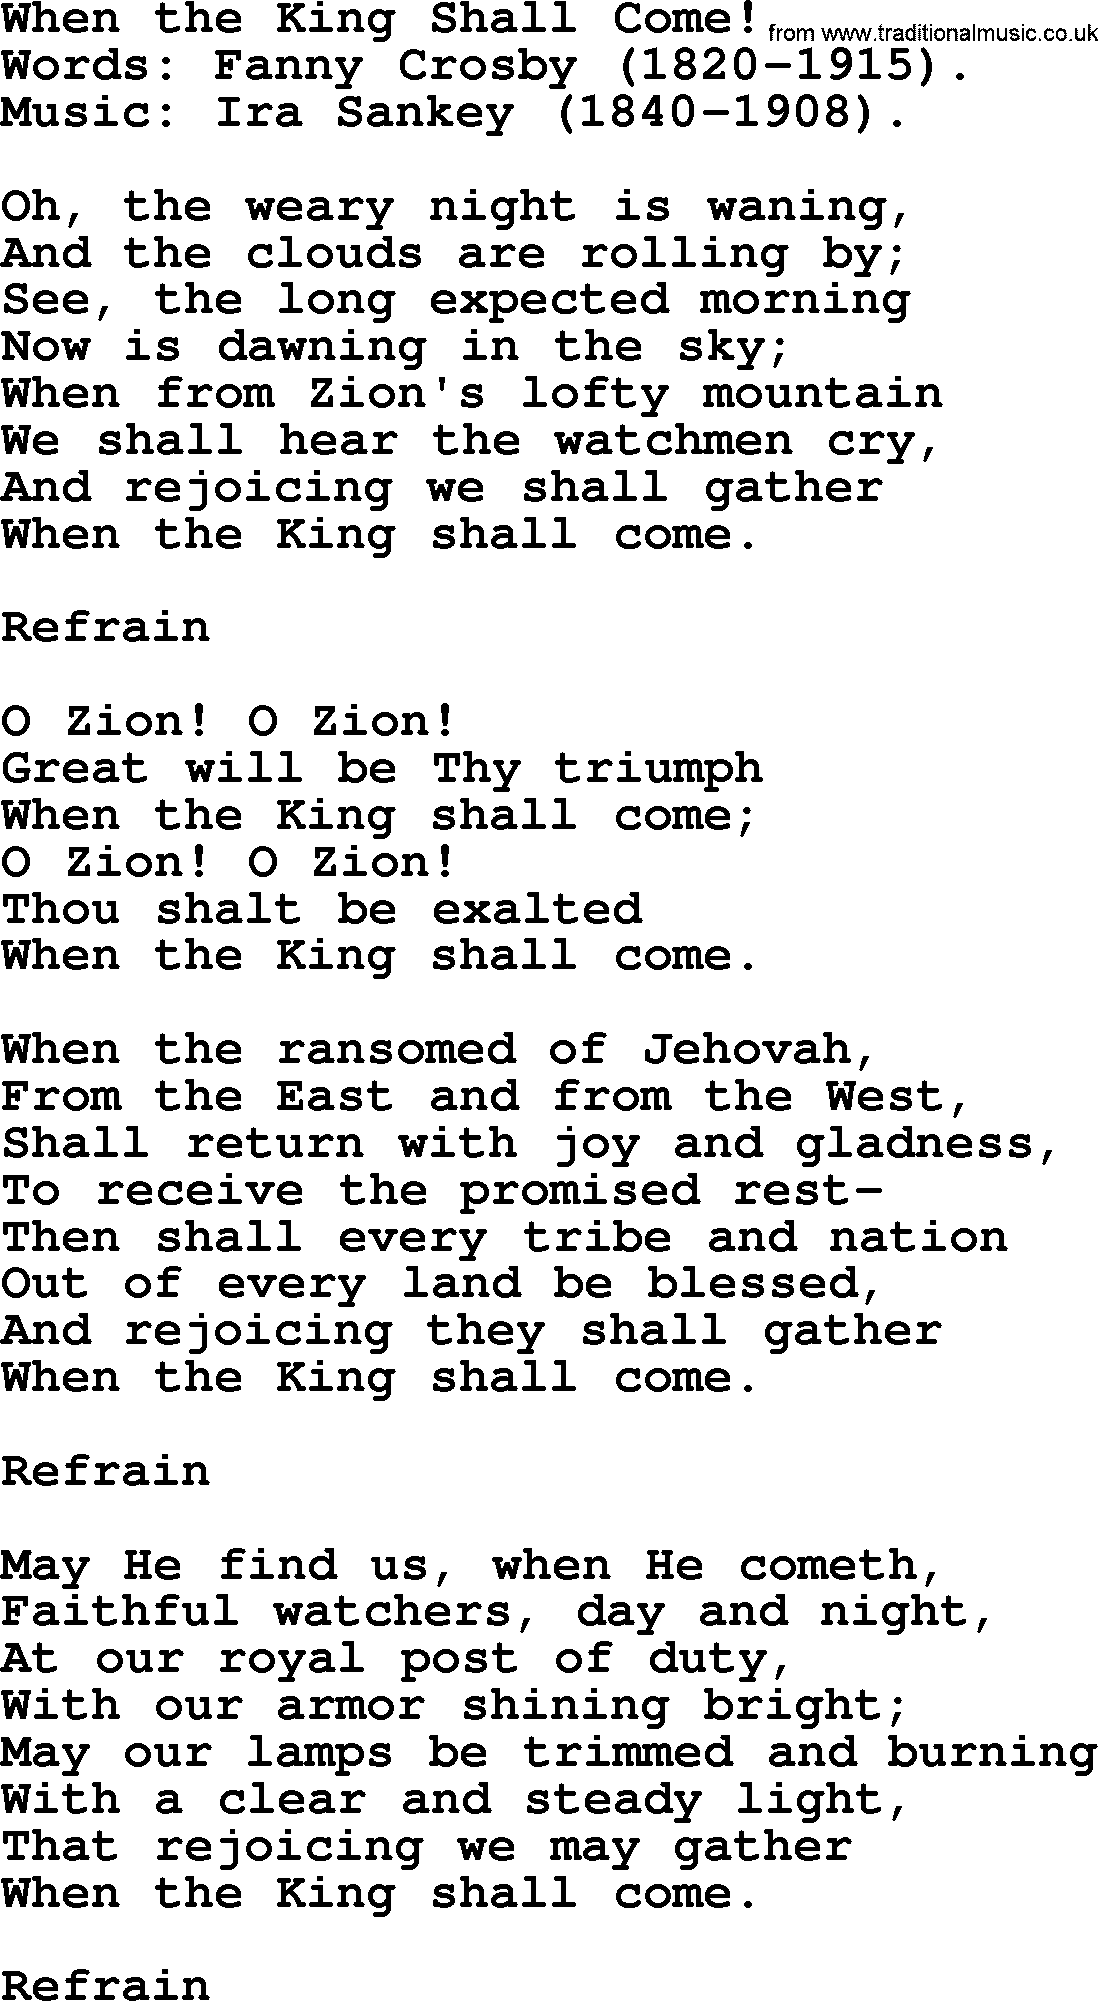 Ira Sankey hymn: When the King Shall Come!-Ira Sankey, lyrics